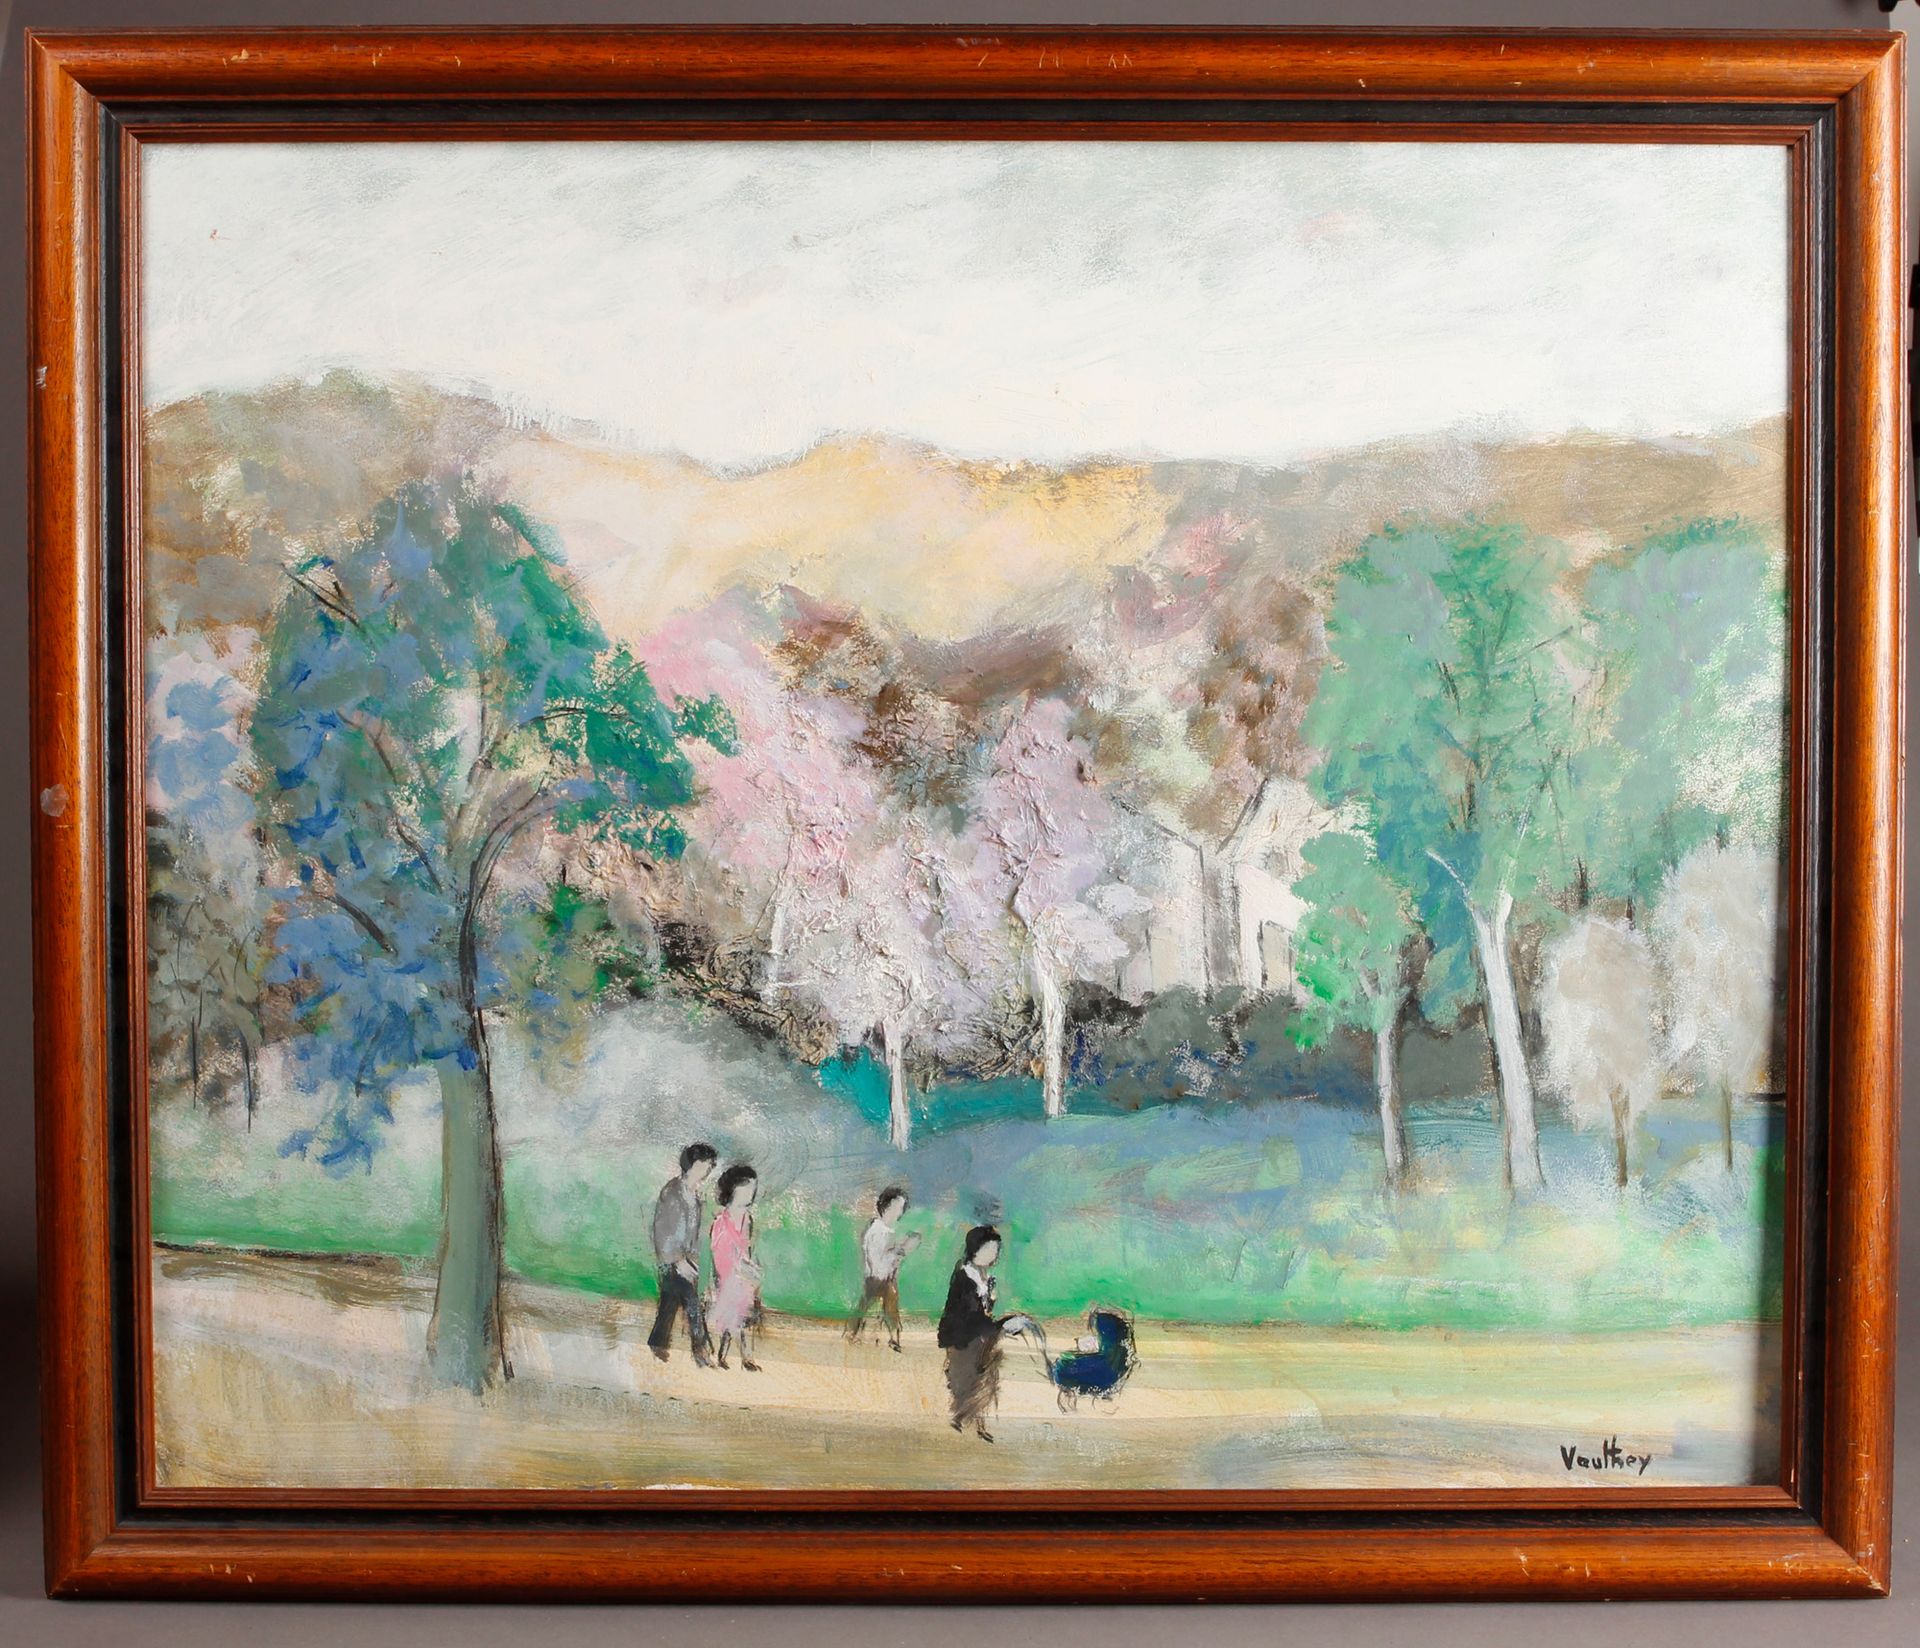 Null 皮埃尔-沃特海（1937-2019年）

动画公园

油画，右下角有签名。

60 x 73 cm

(框架为天然木材)。